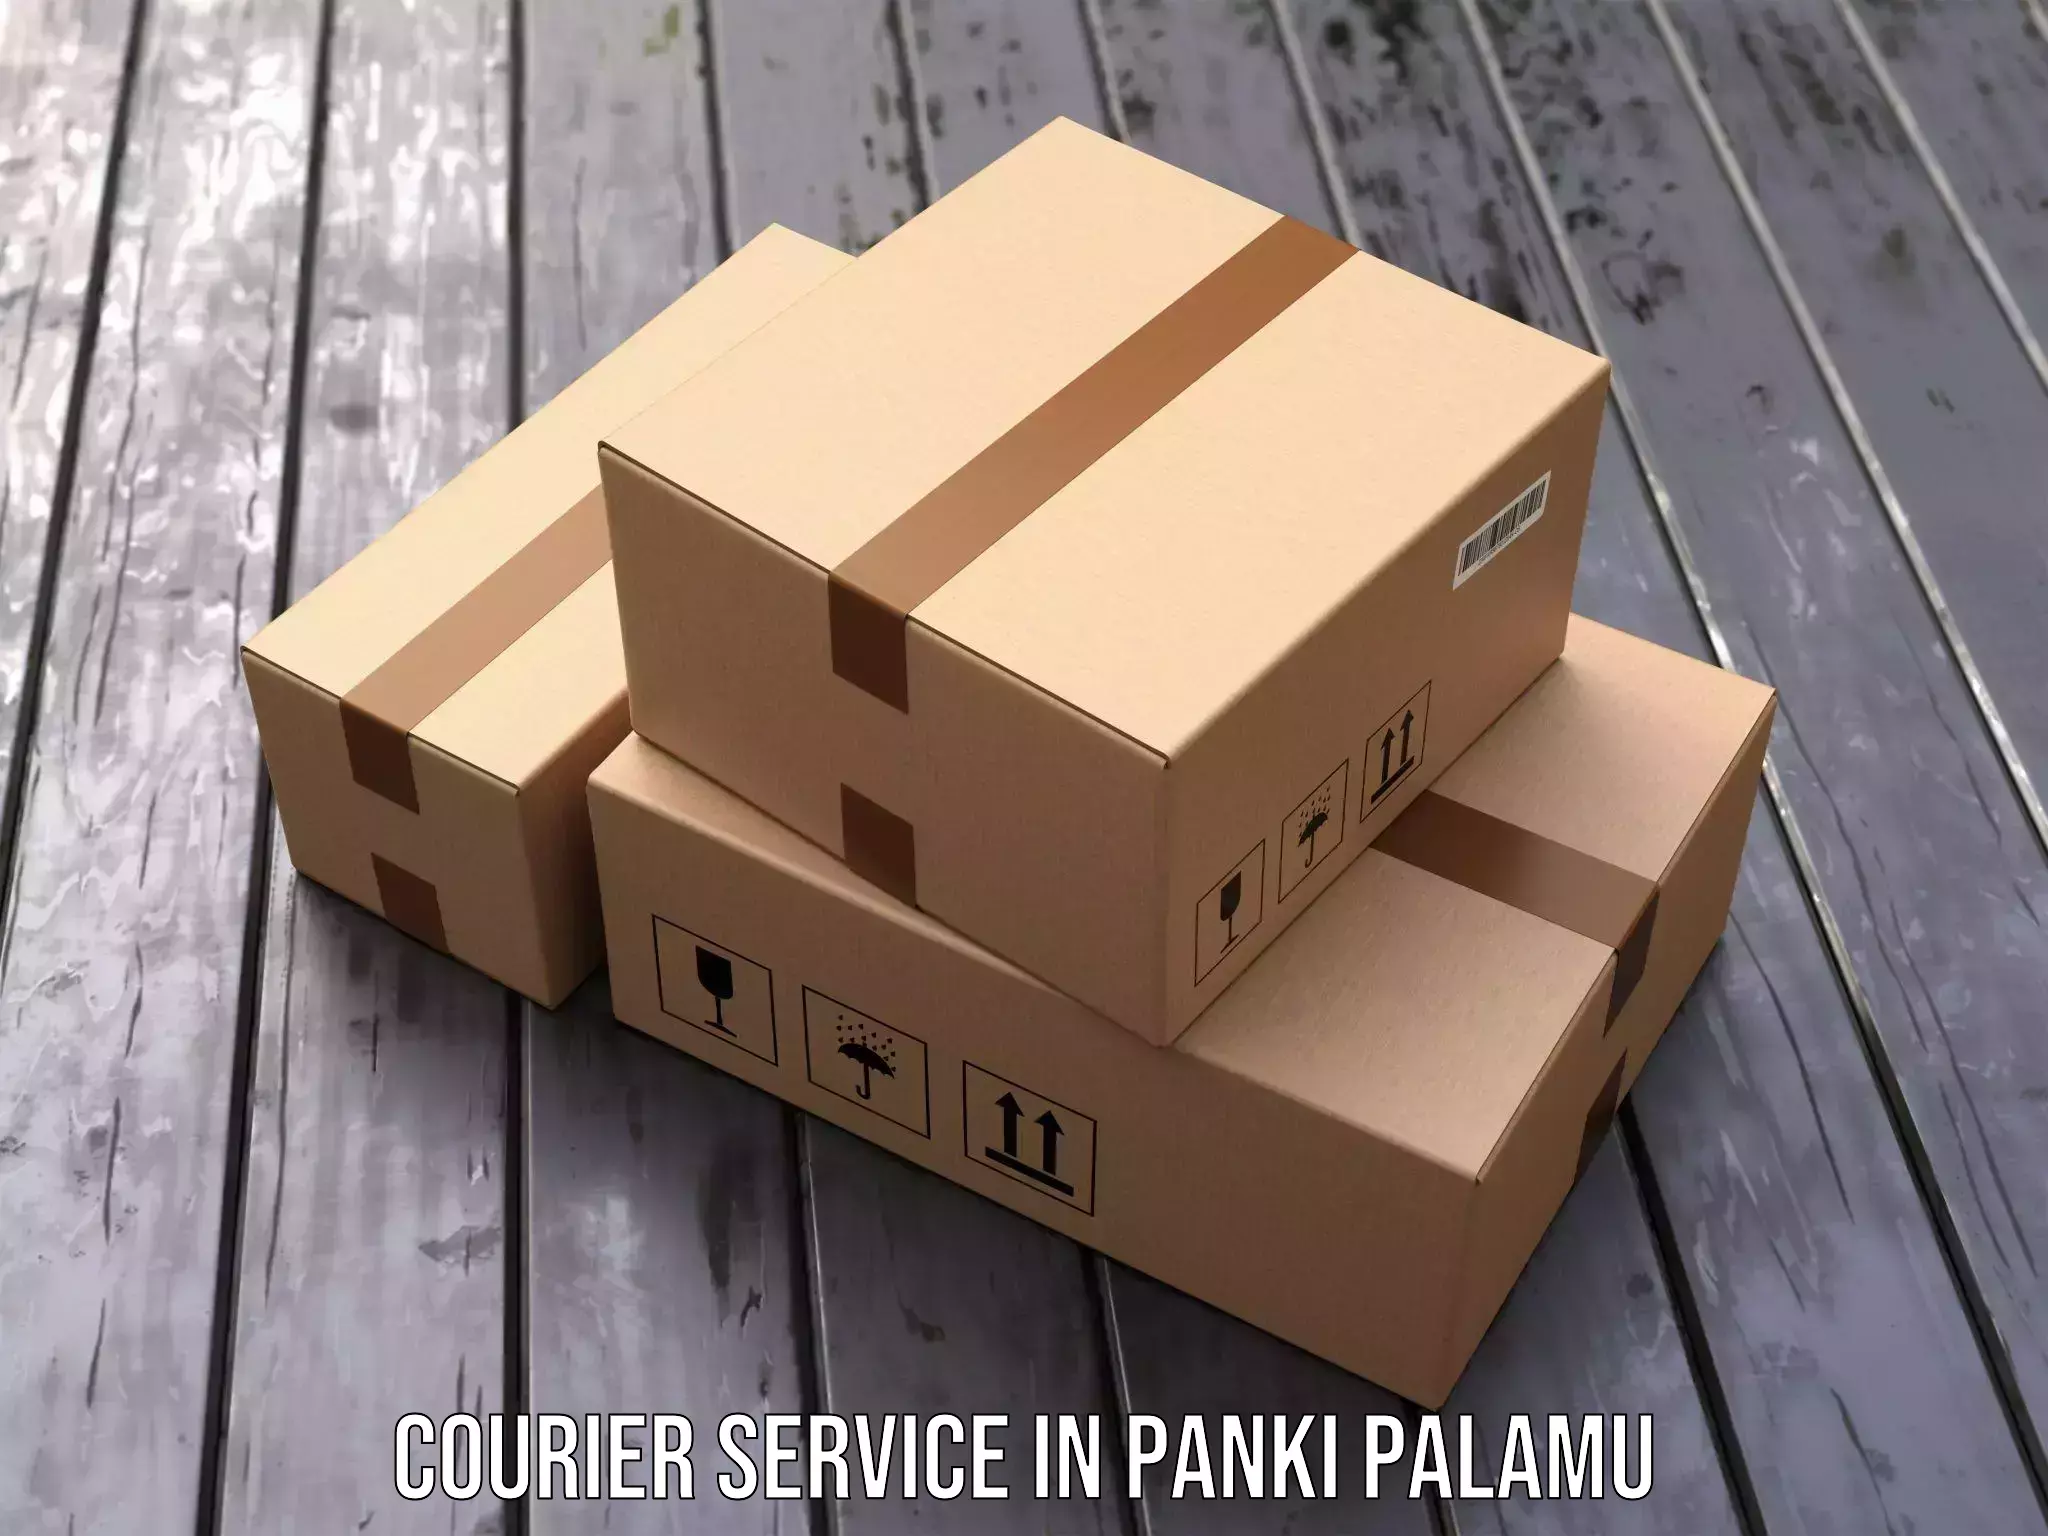 Supply chain delivery in Panki Palamu